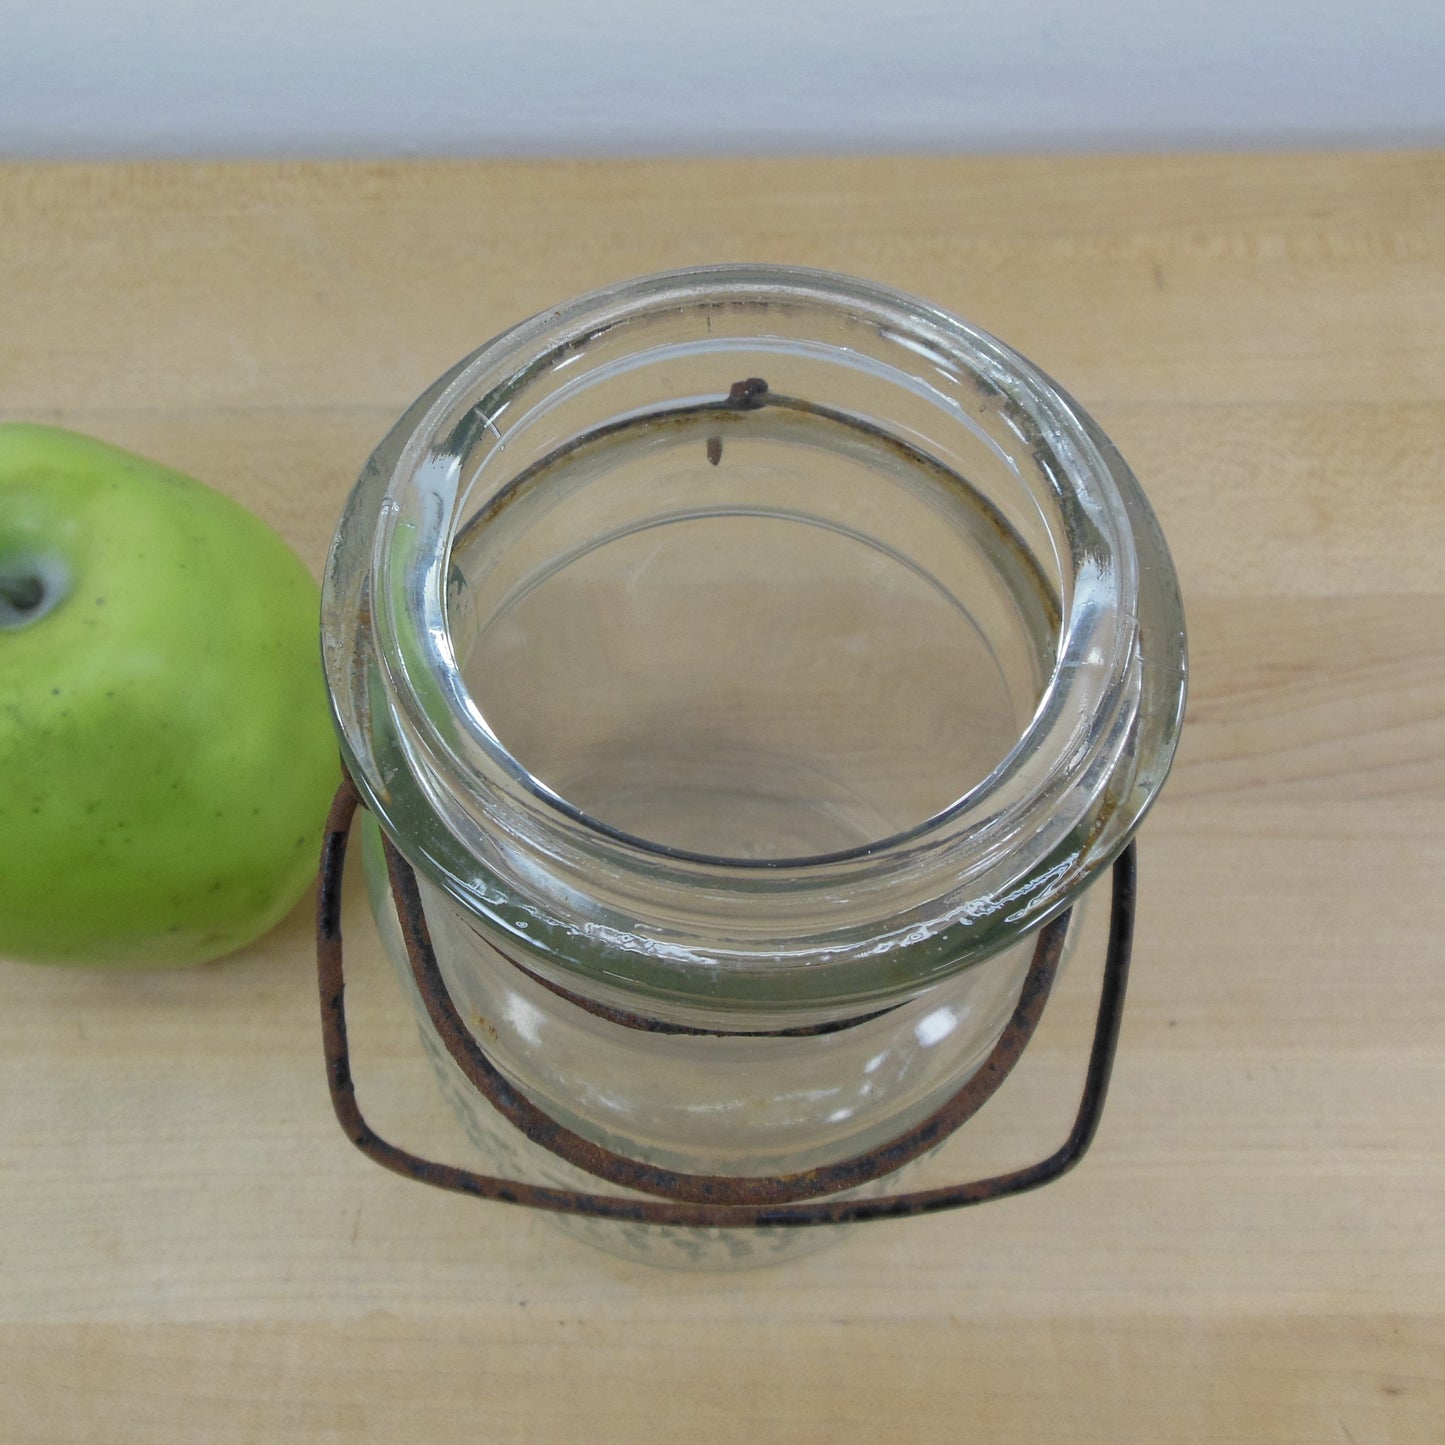 Lightning Putnam Trademark Patent Pint Clear Glass Fruit Canning Jar wide mouth